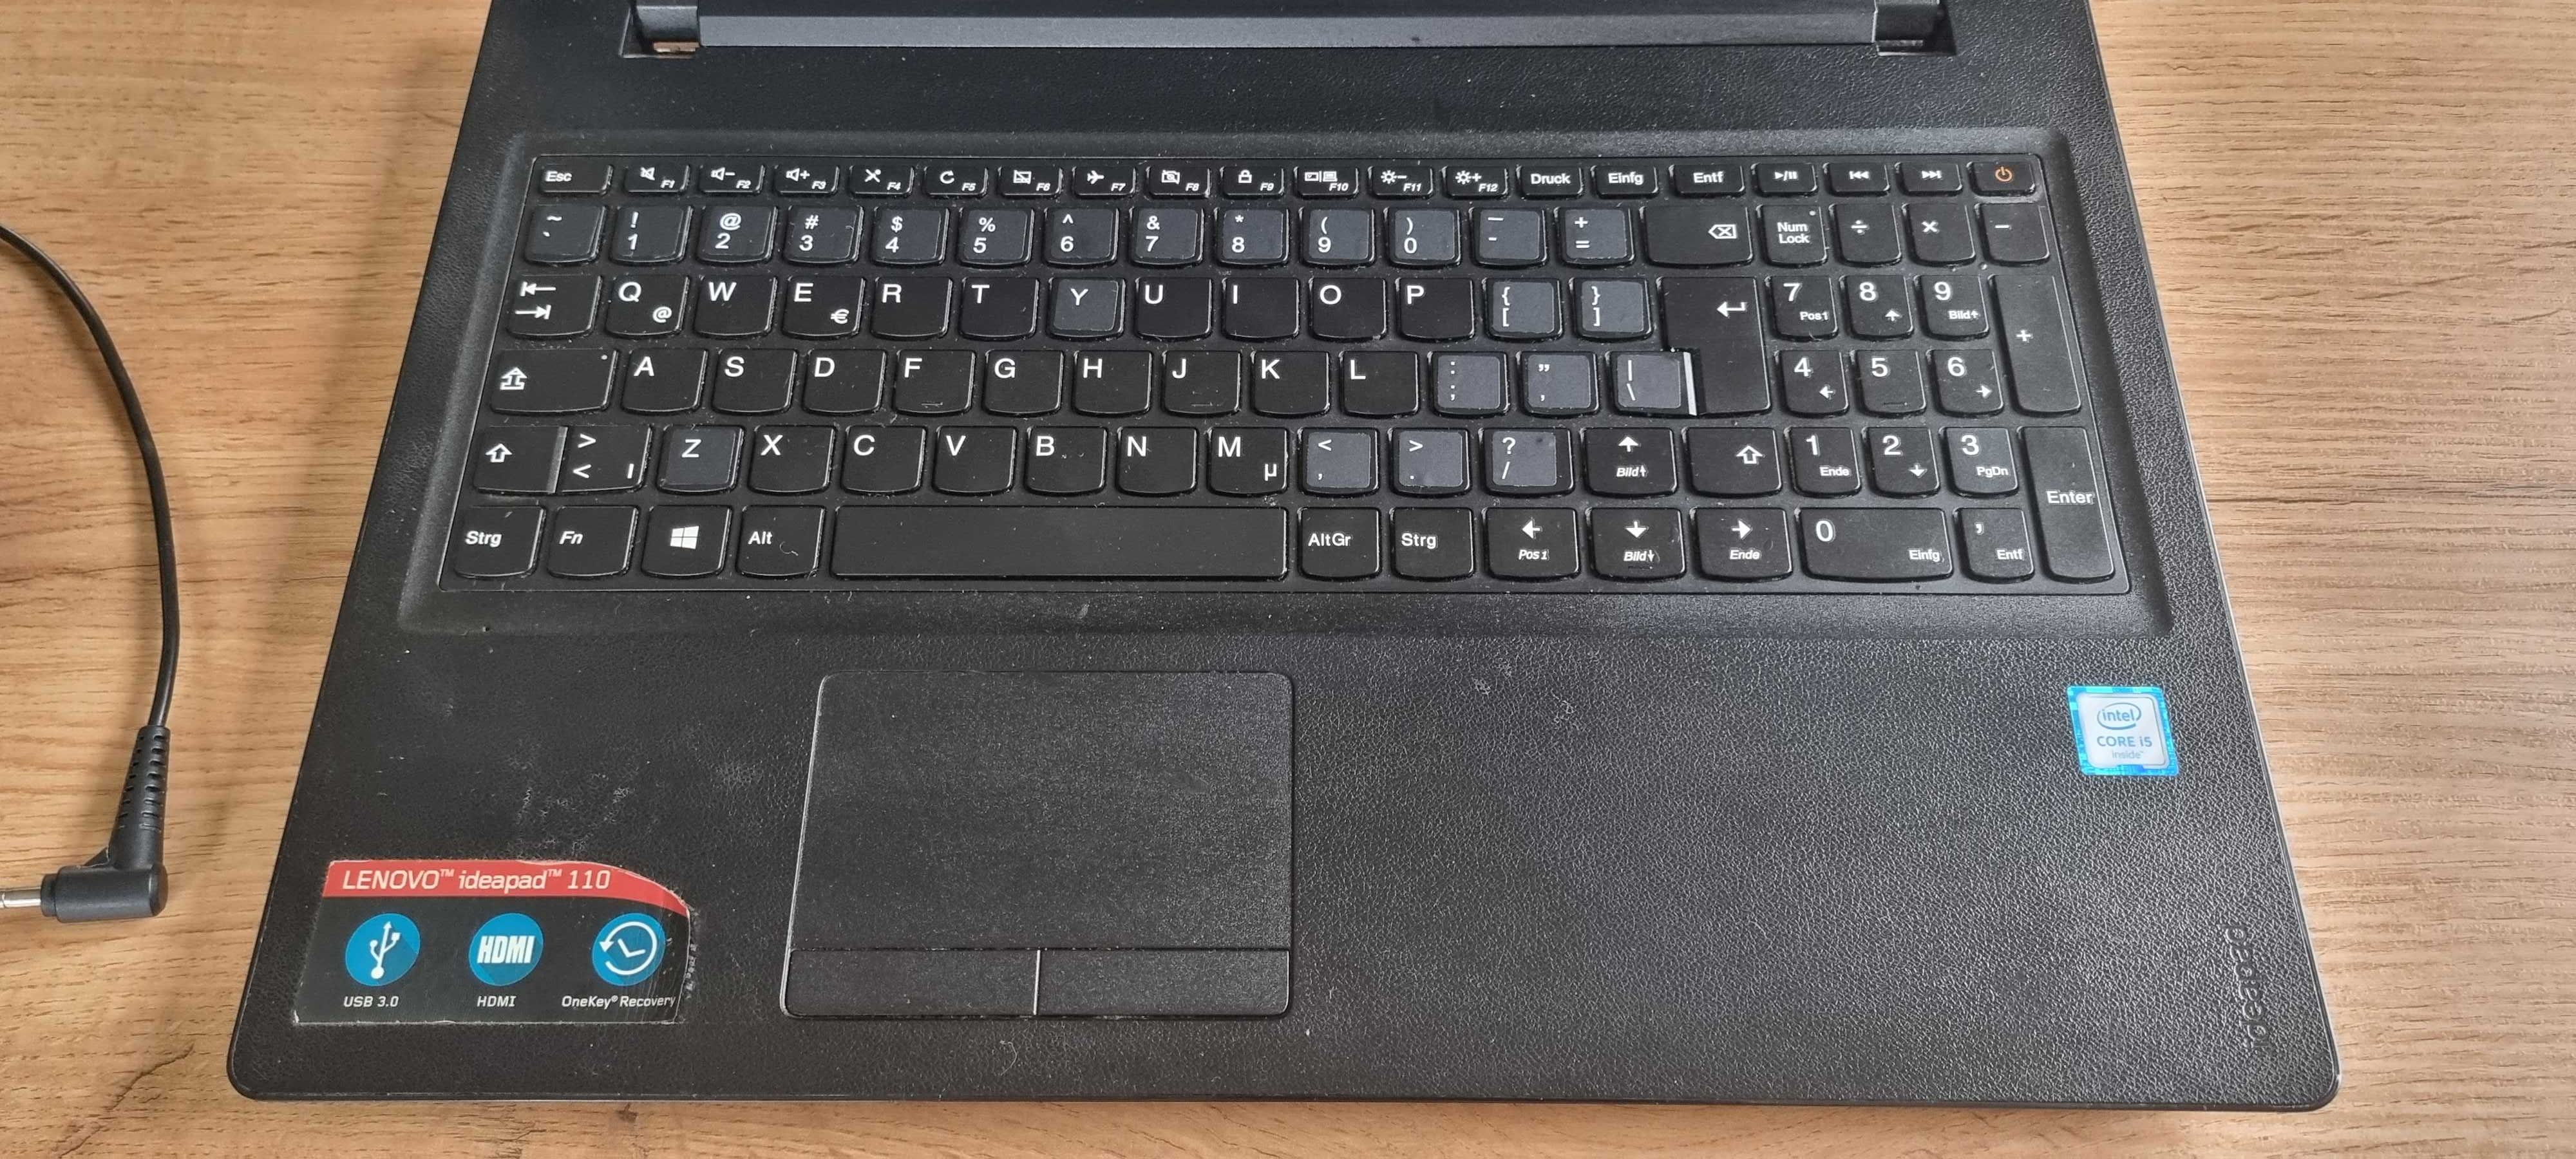 Laptop Lenovo ideapad 110-15isk